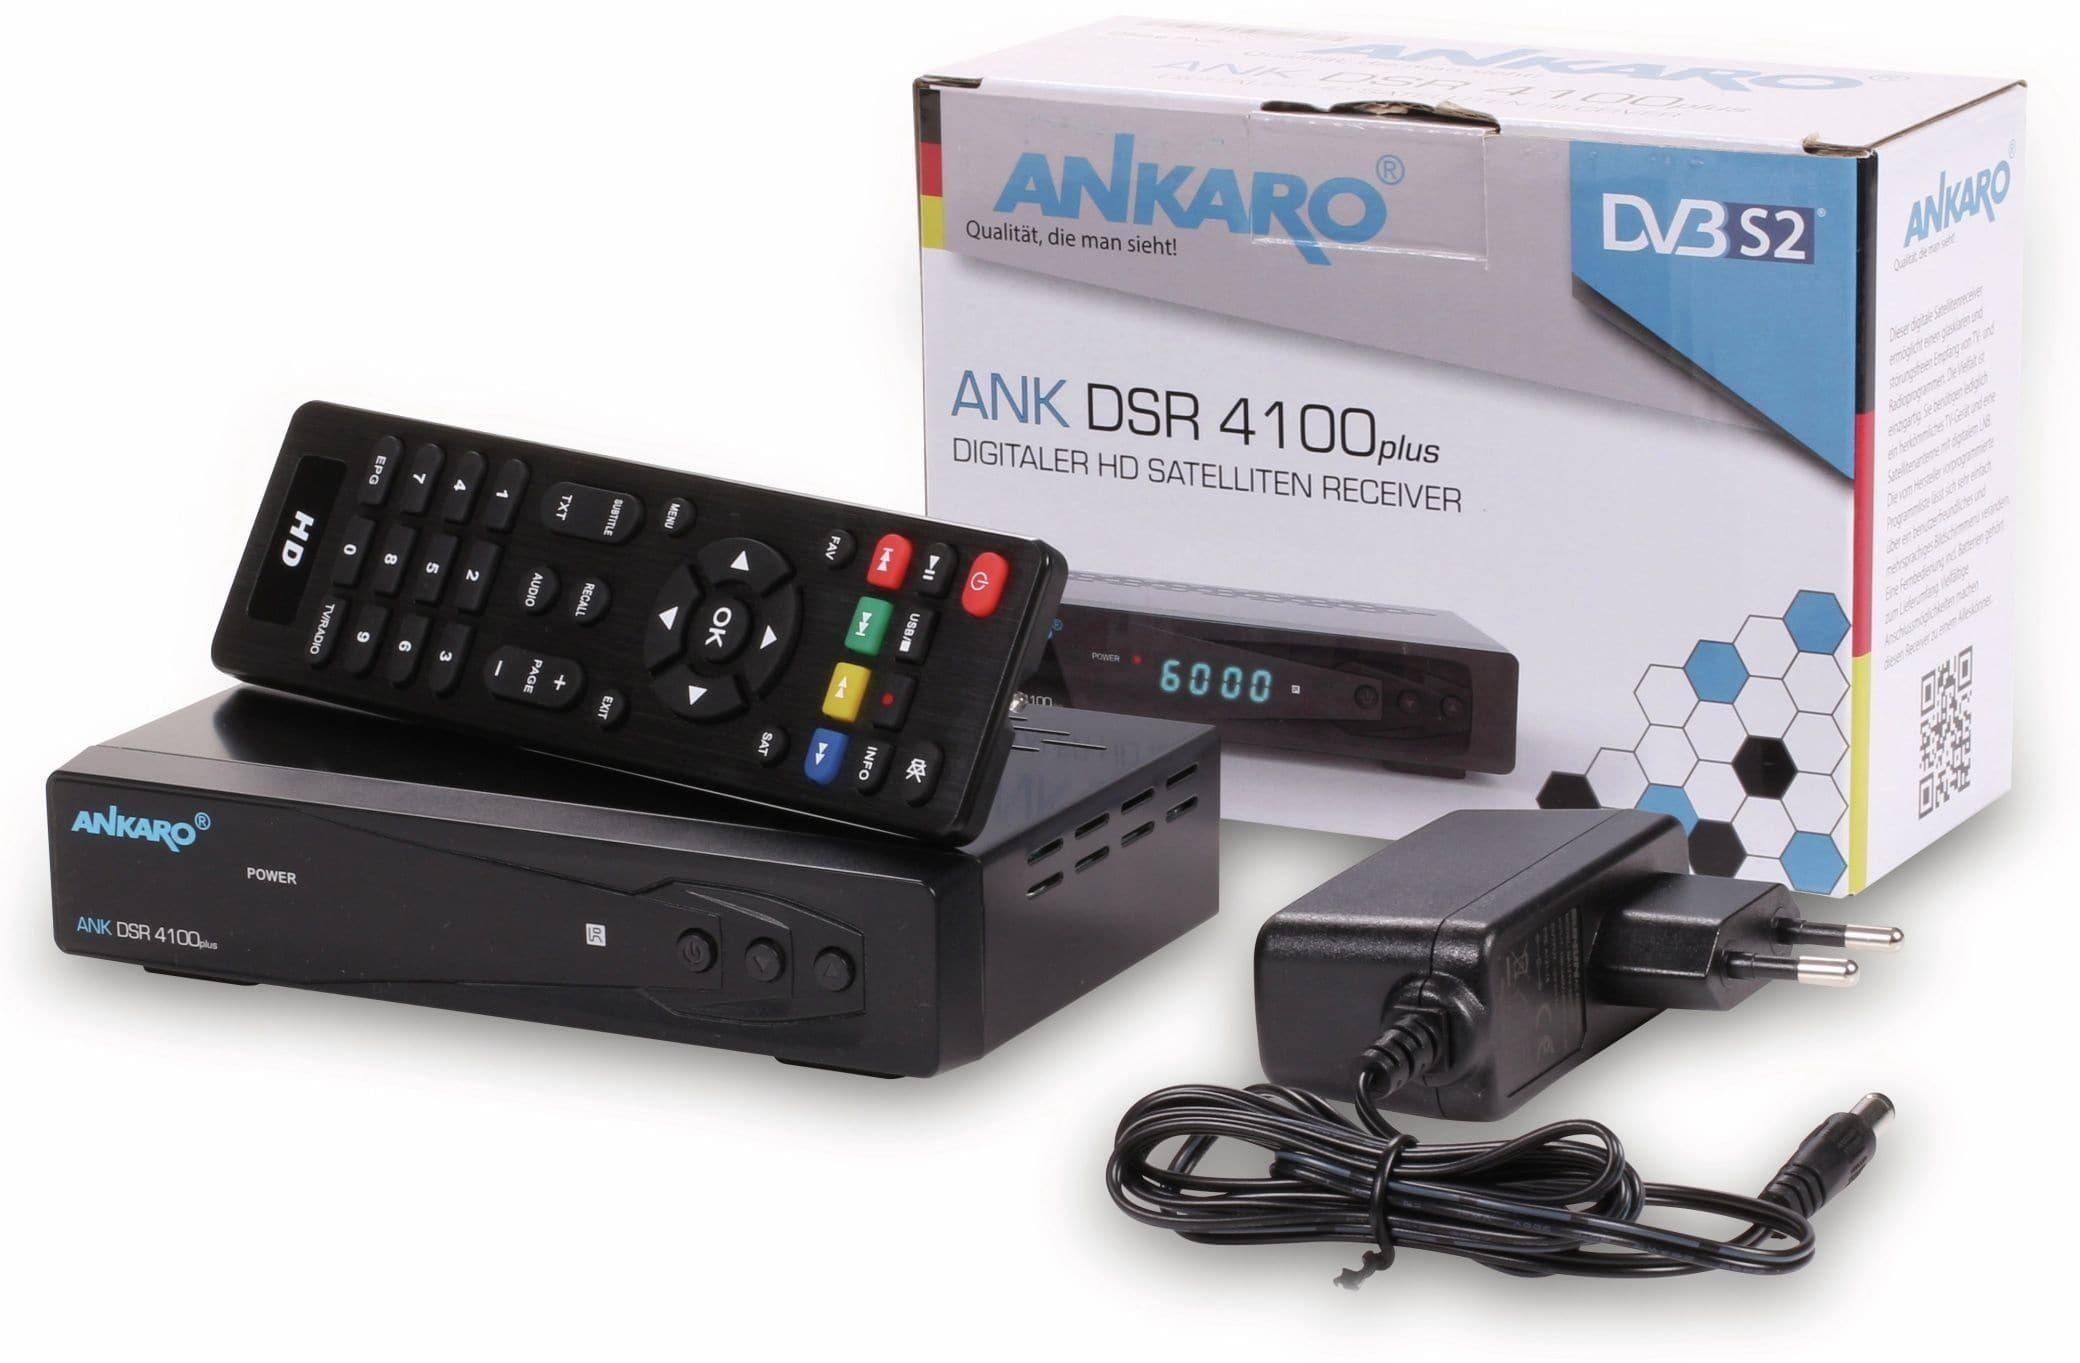 ANKARO Ankaro Satellitenreceiver 4100plus, DVB-S DSR HDTV-Receiver PVR